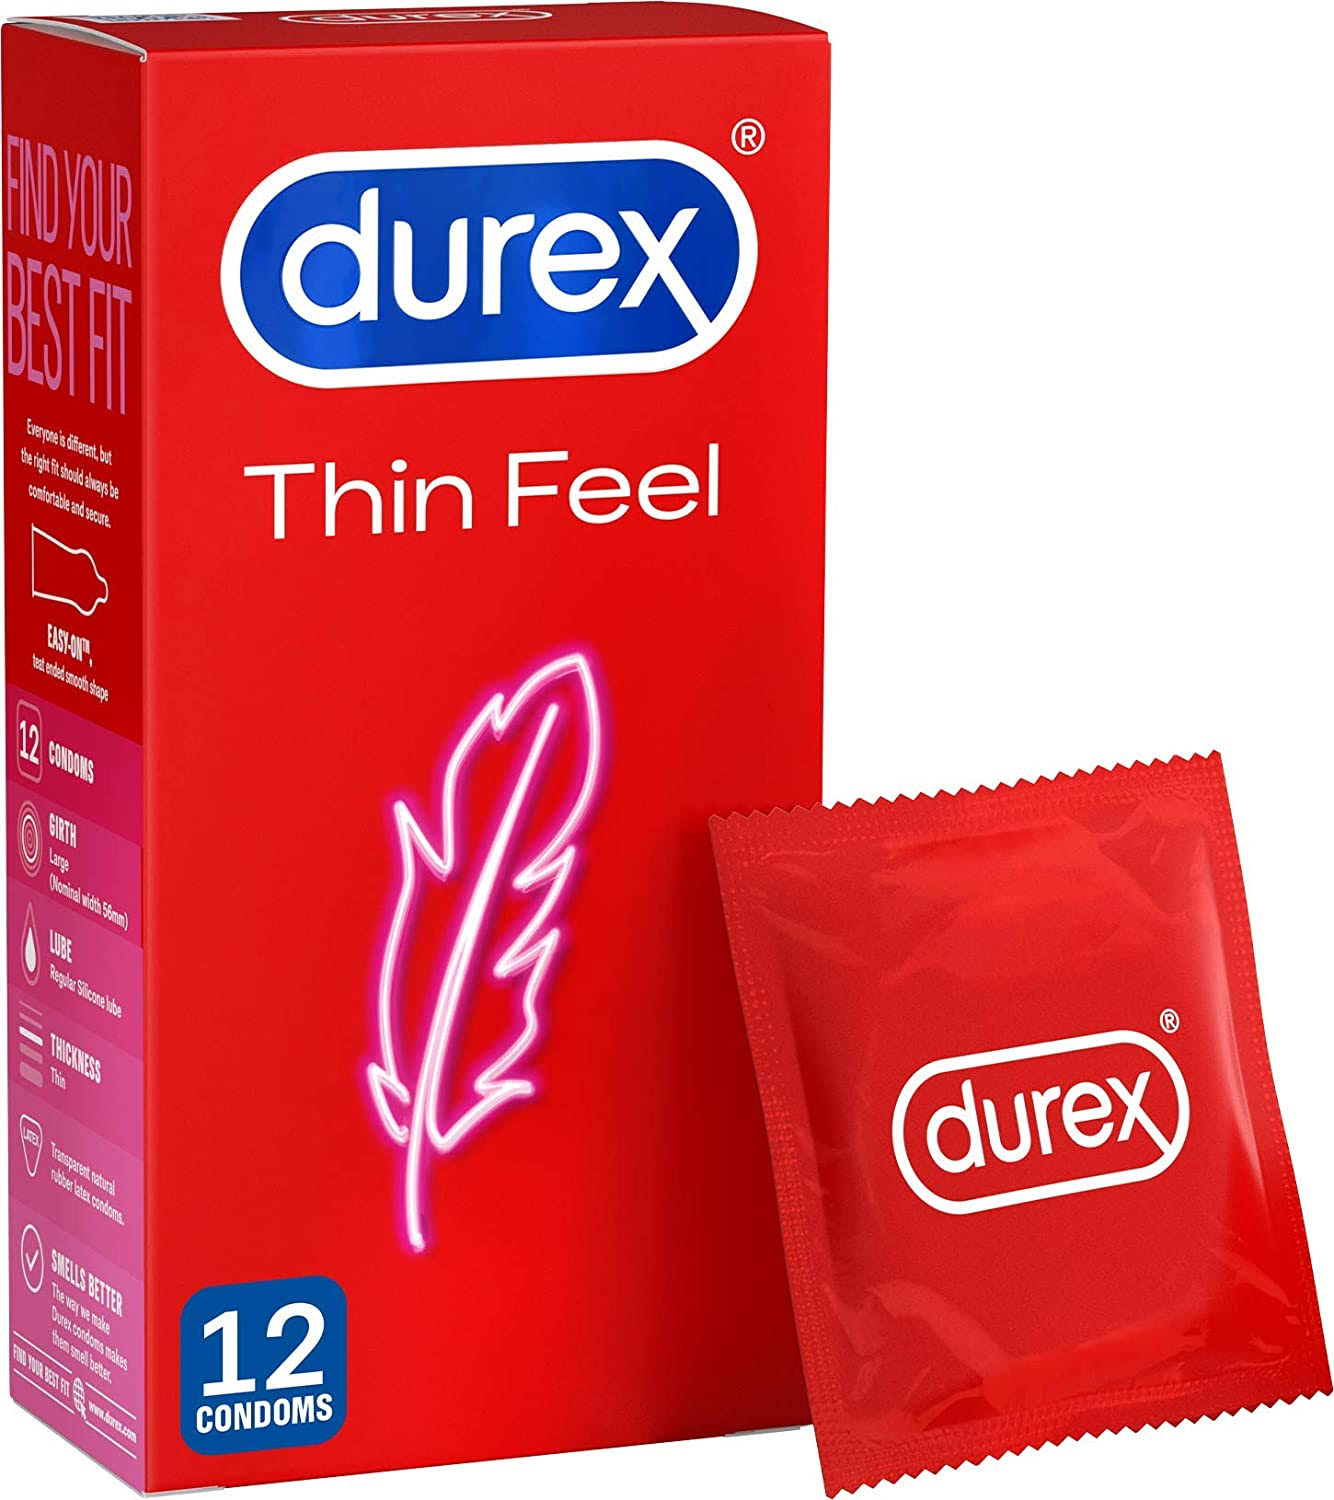 Durex Thin Feel Condoms - 12pcs